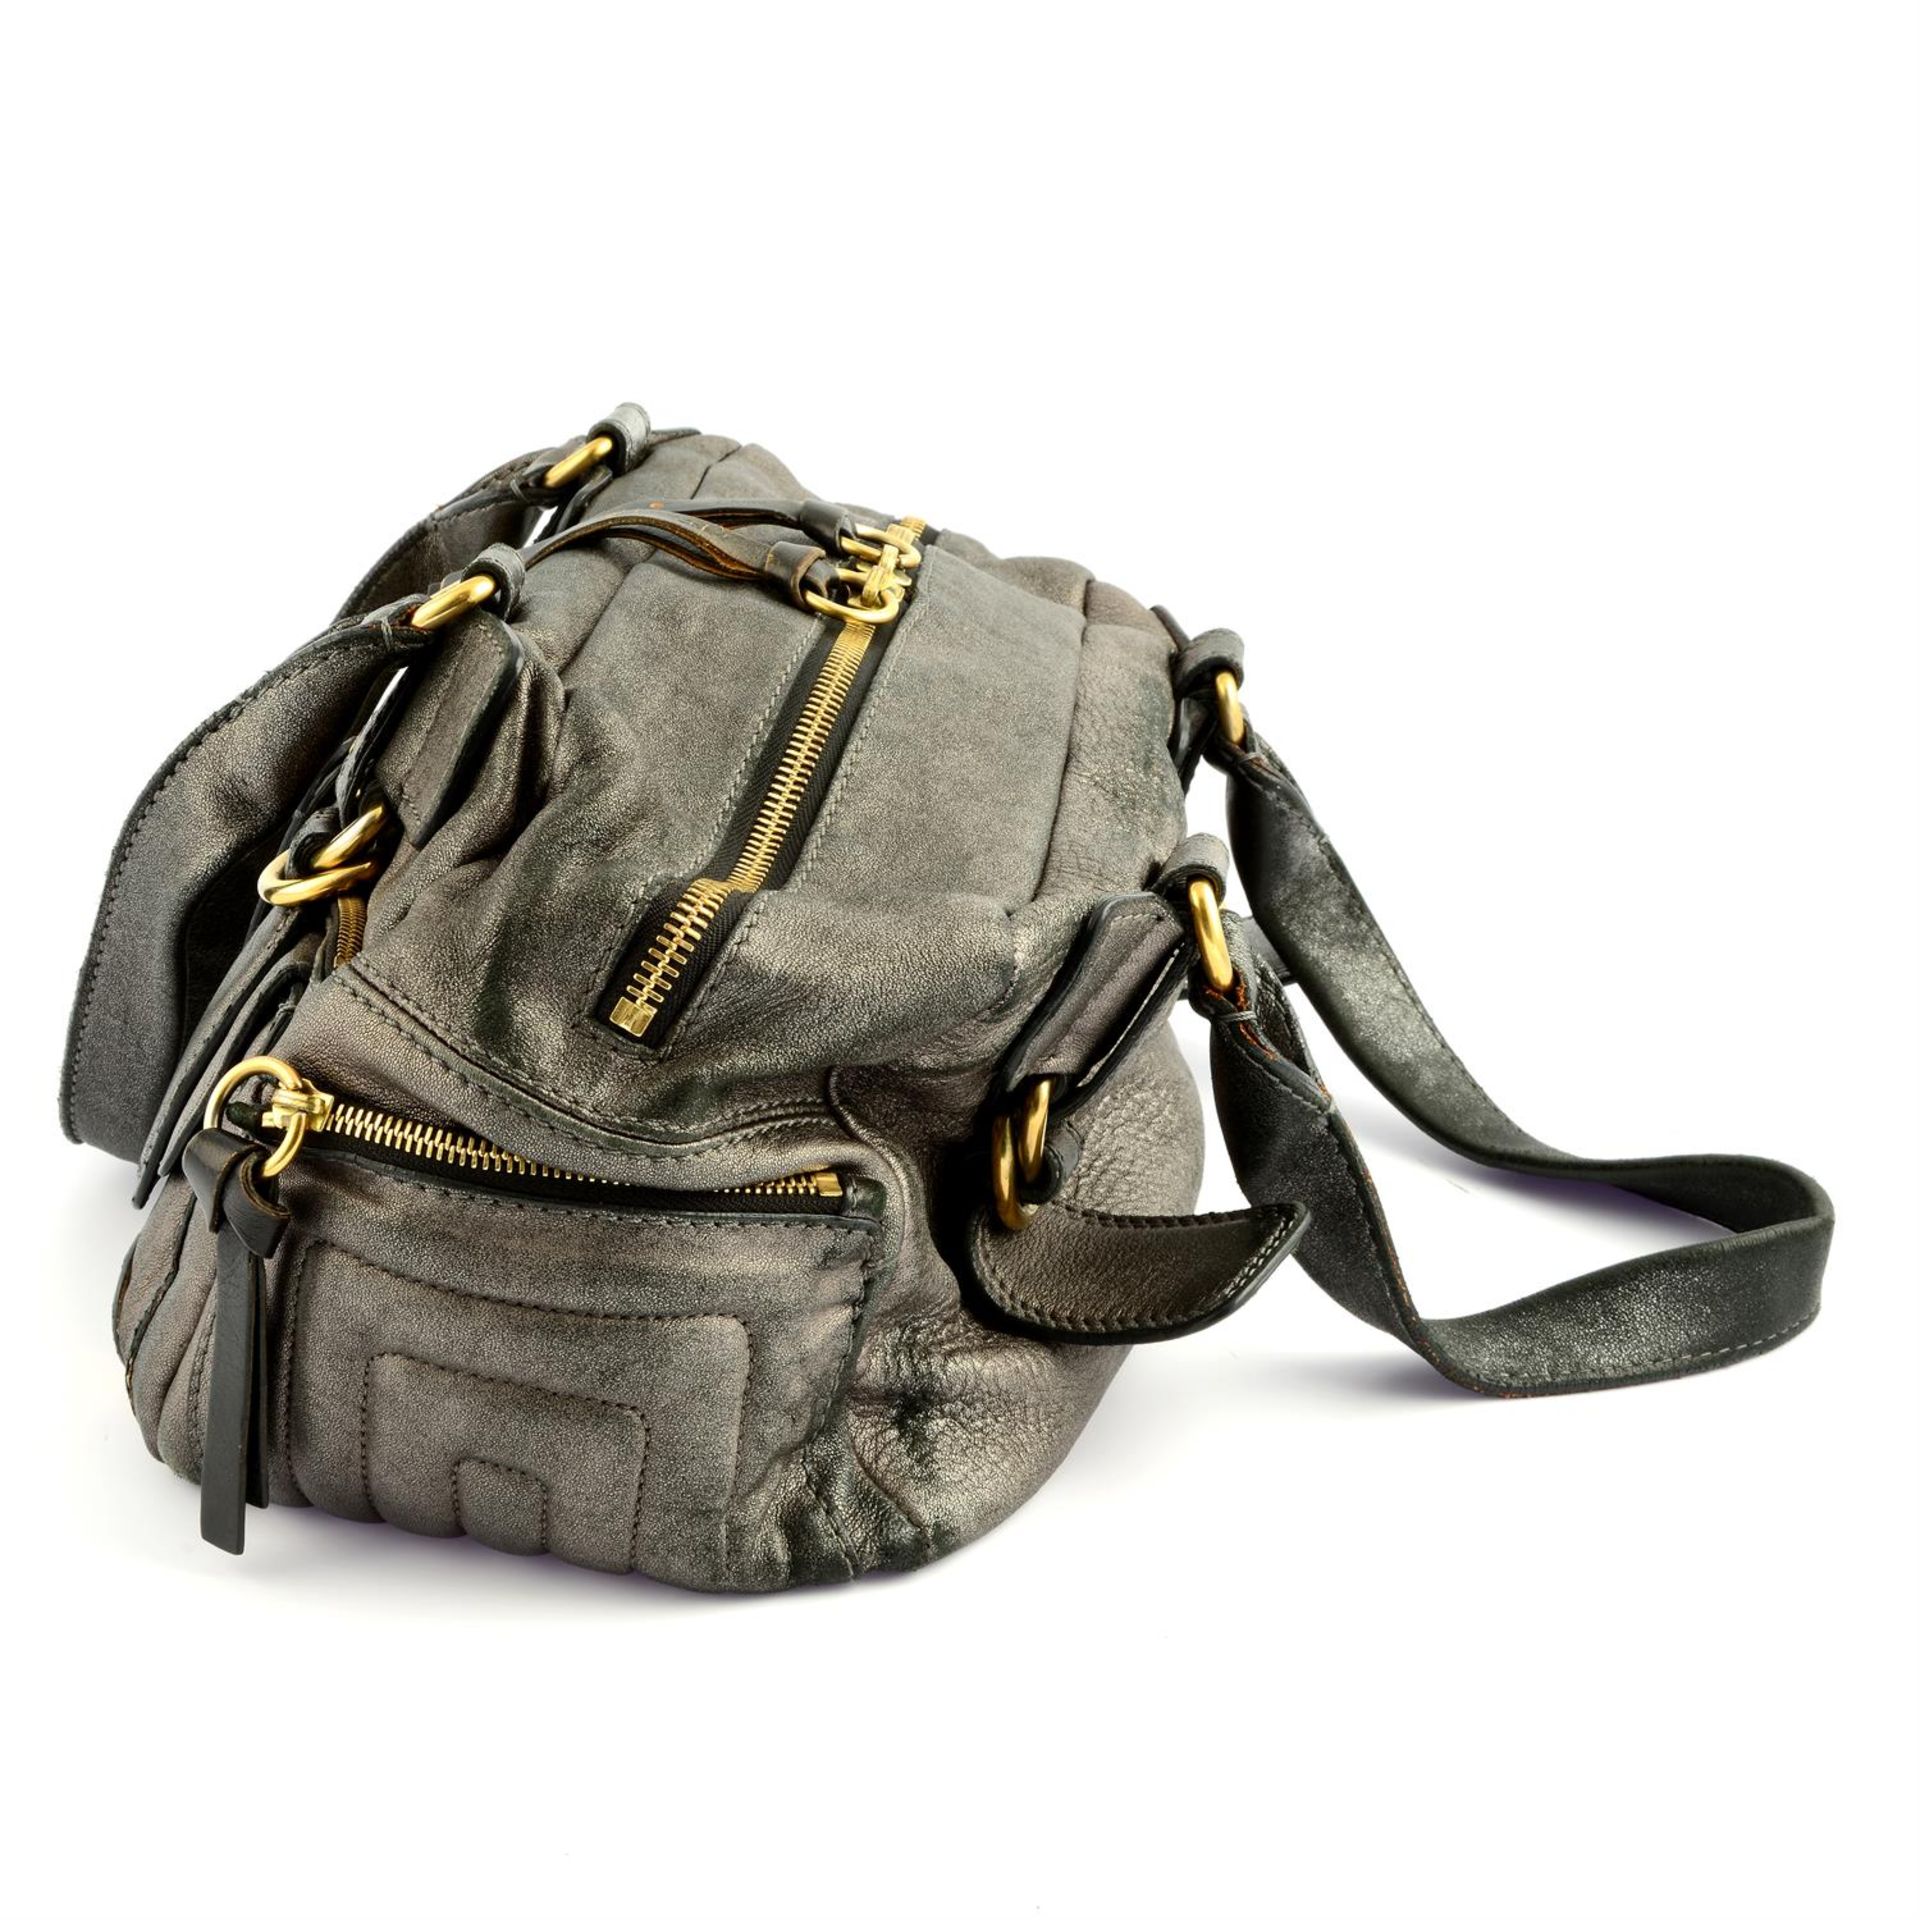 CHLOÉ- a gunmetal leather Bay handbag. - Image 3 of 5